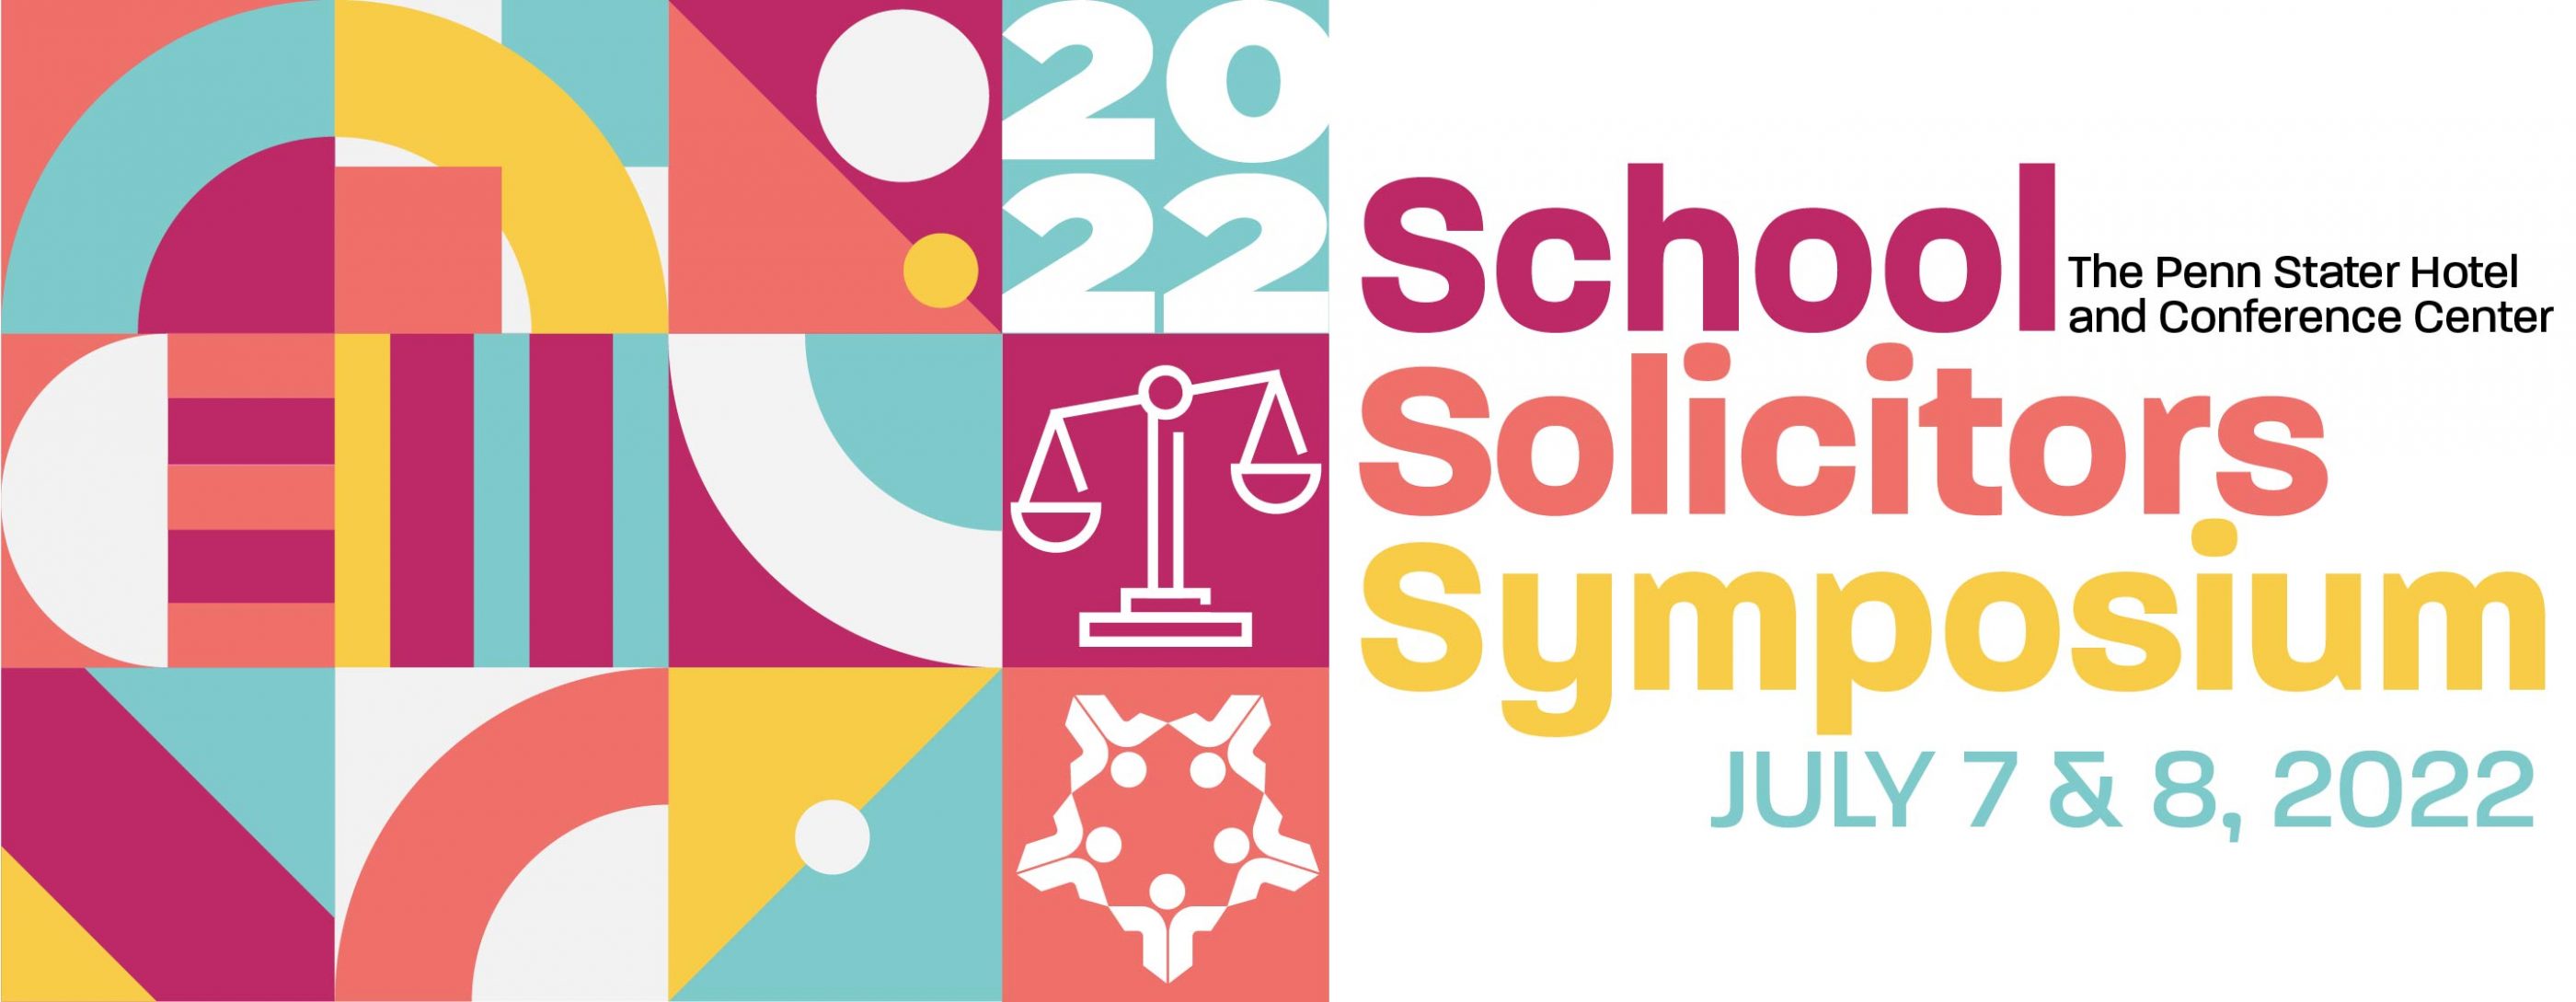 Register for the School Solicitors Symposium